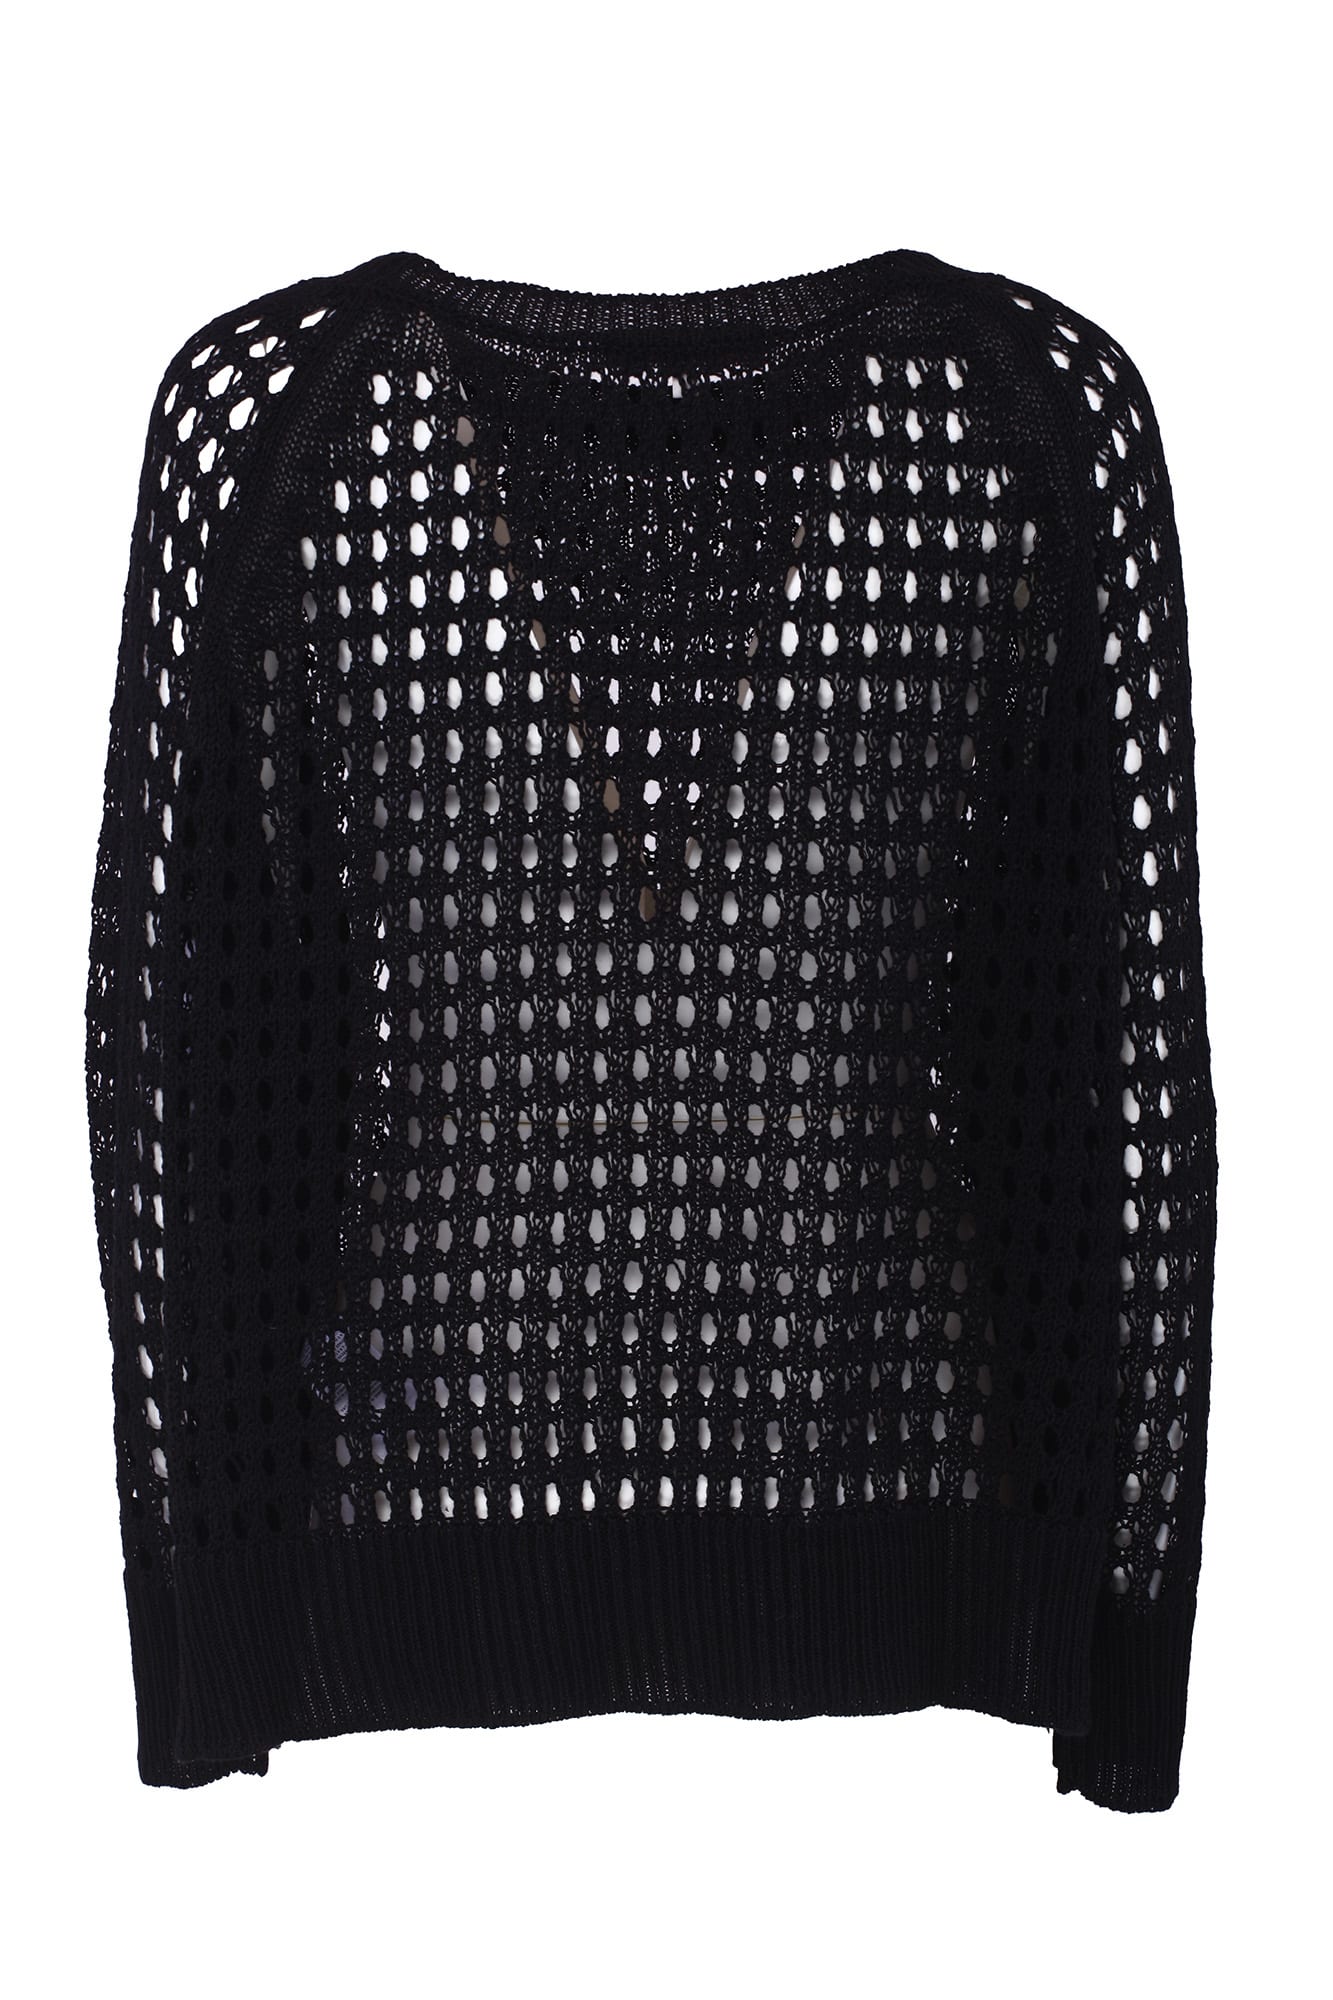 Shop Antonelli Firenze Sweaters Black